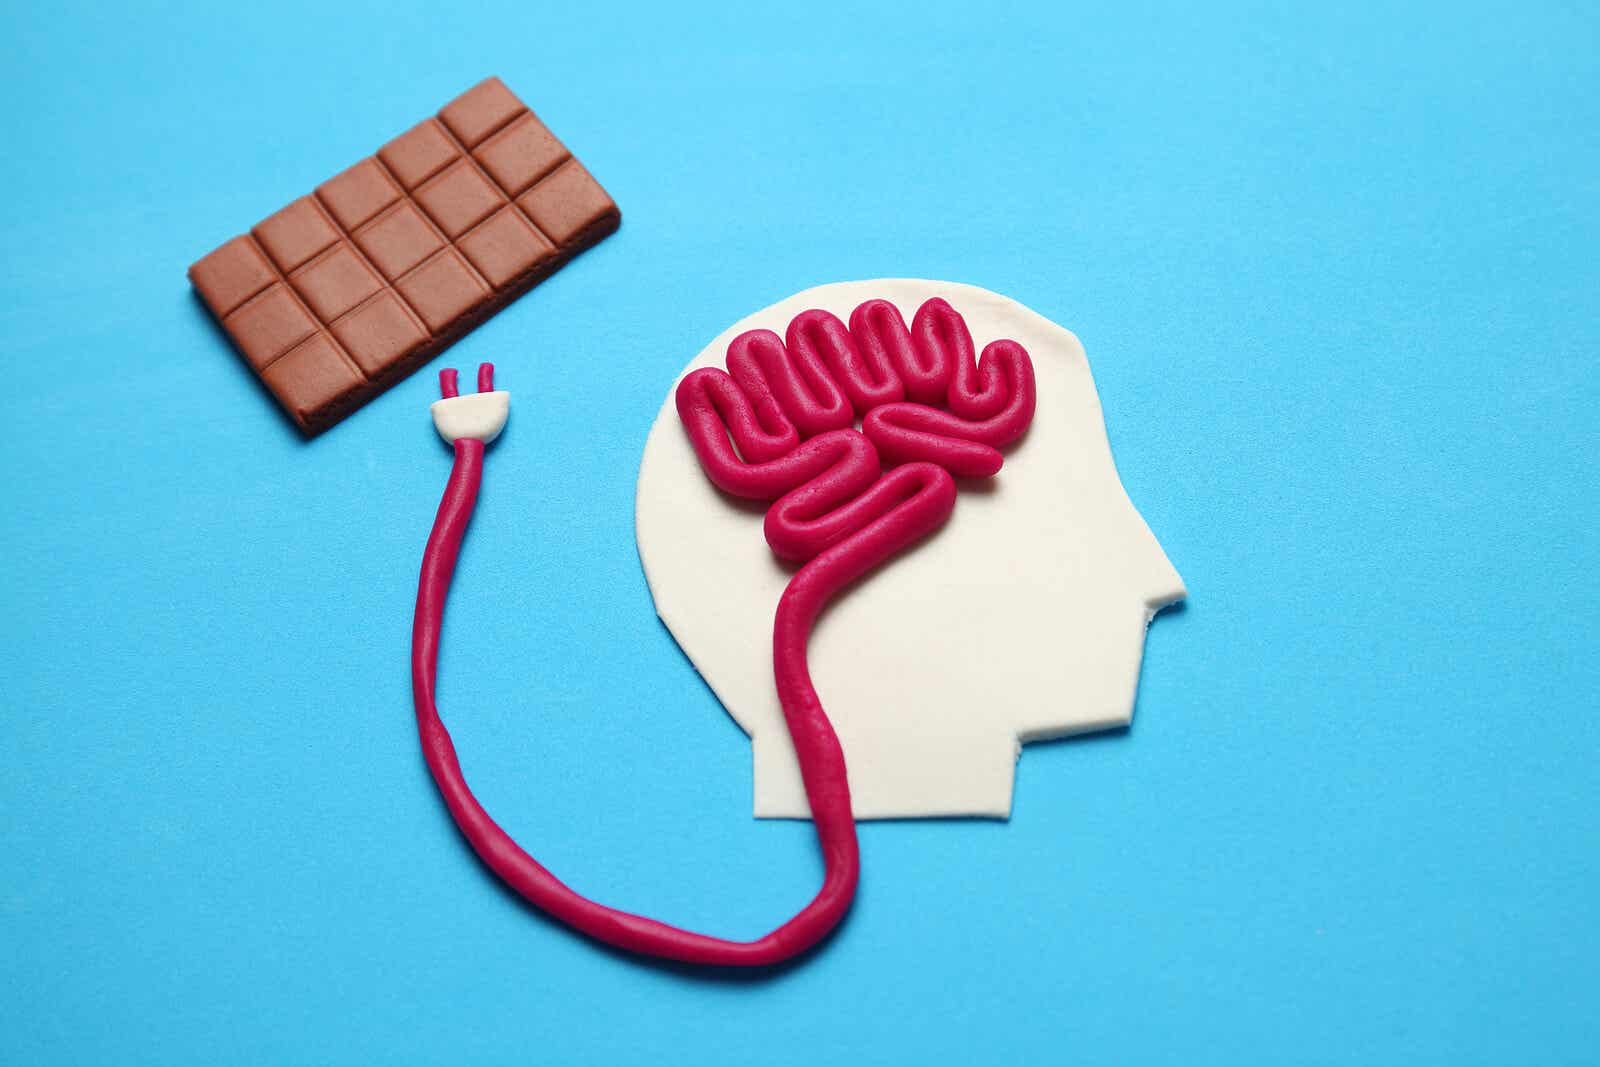 Chocolate is good brain food